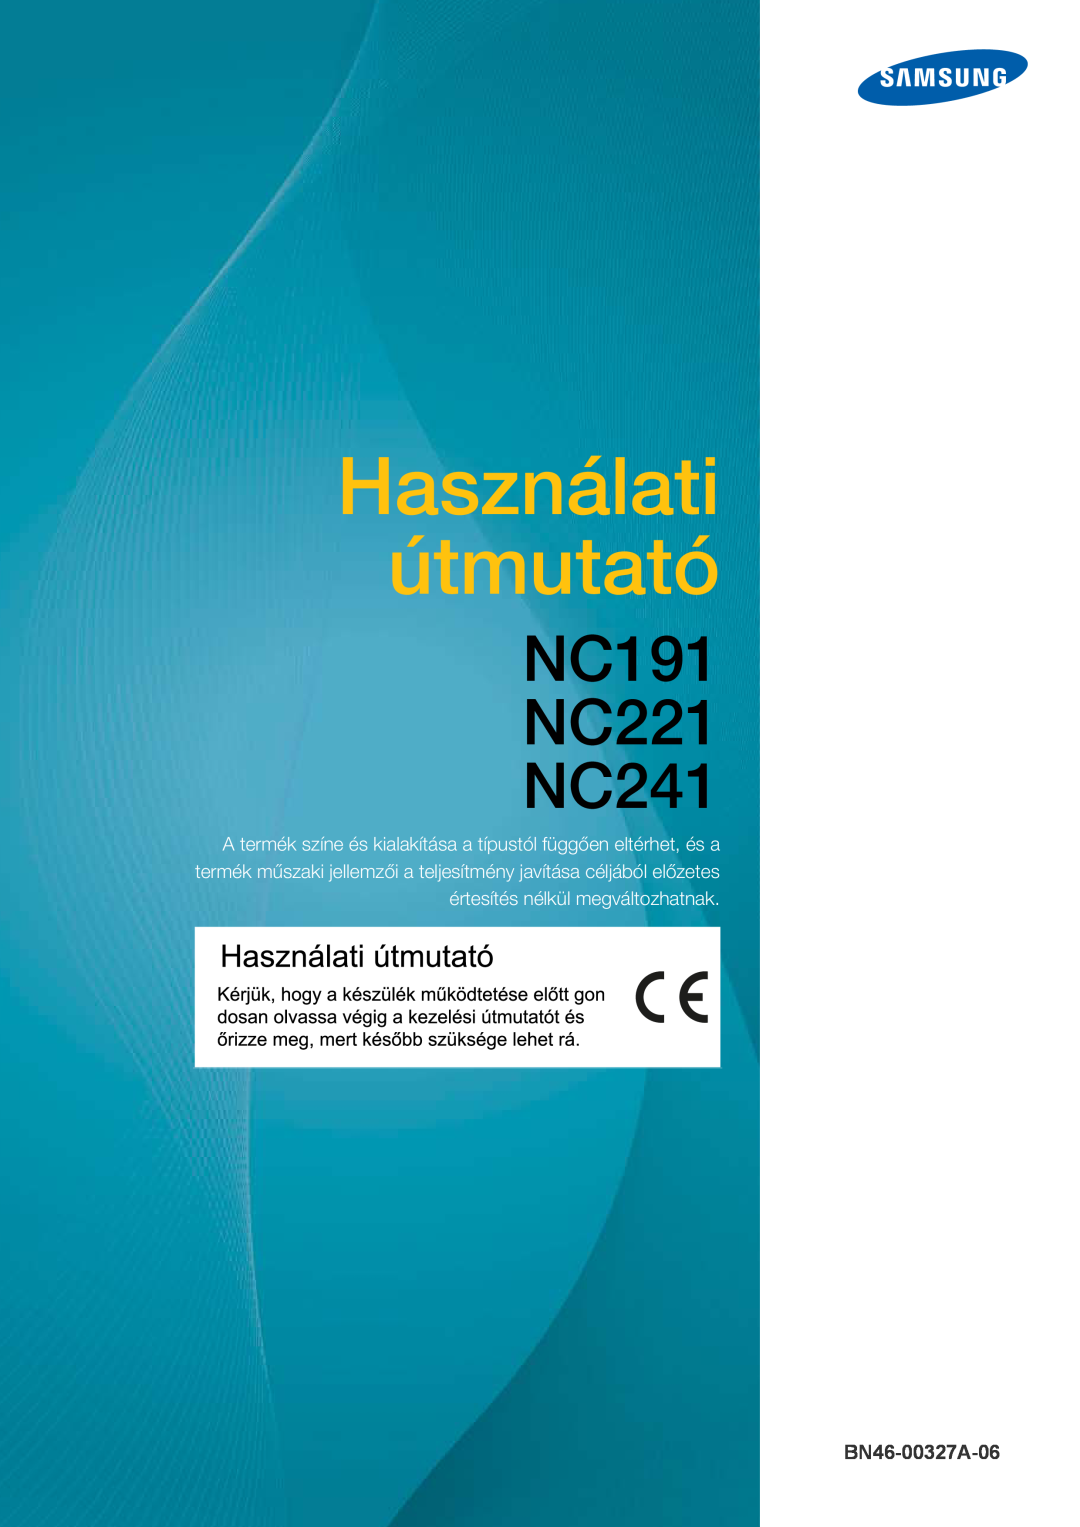 Samsung LF22FN1PFBZXEN, LF22NTBHBNM/EN manual Manuel de lutilisateur, NC191 NC221 NC241, BN46-00327A-06 